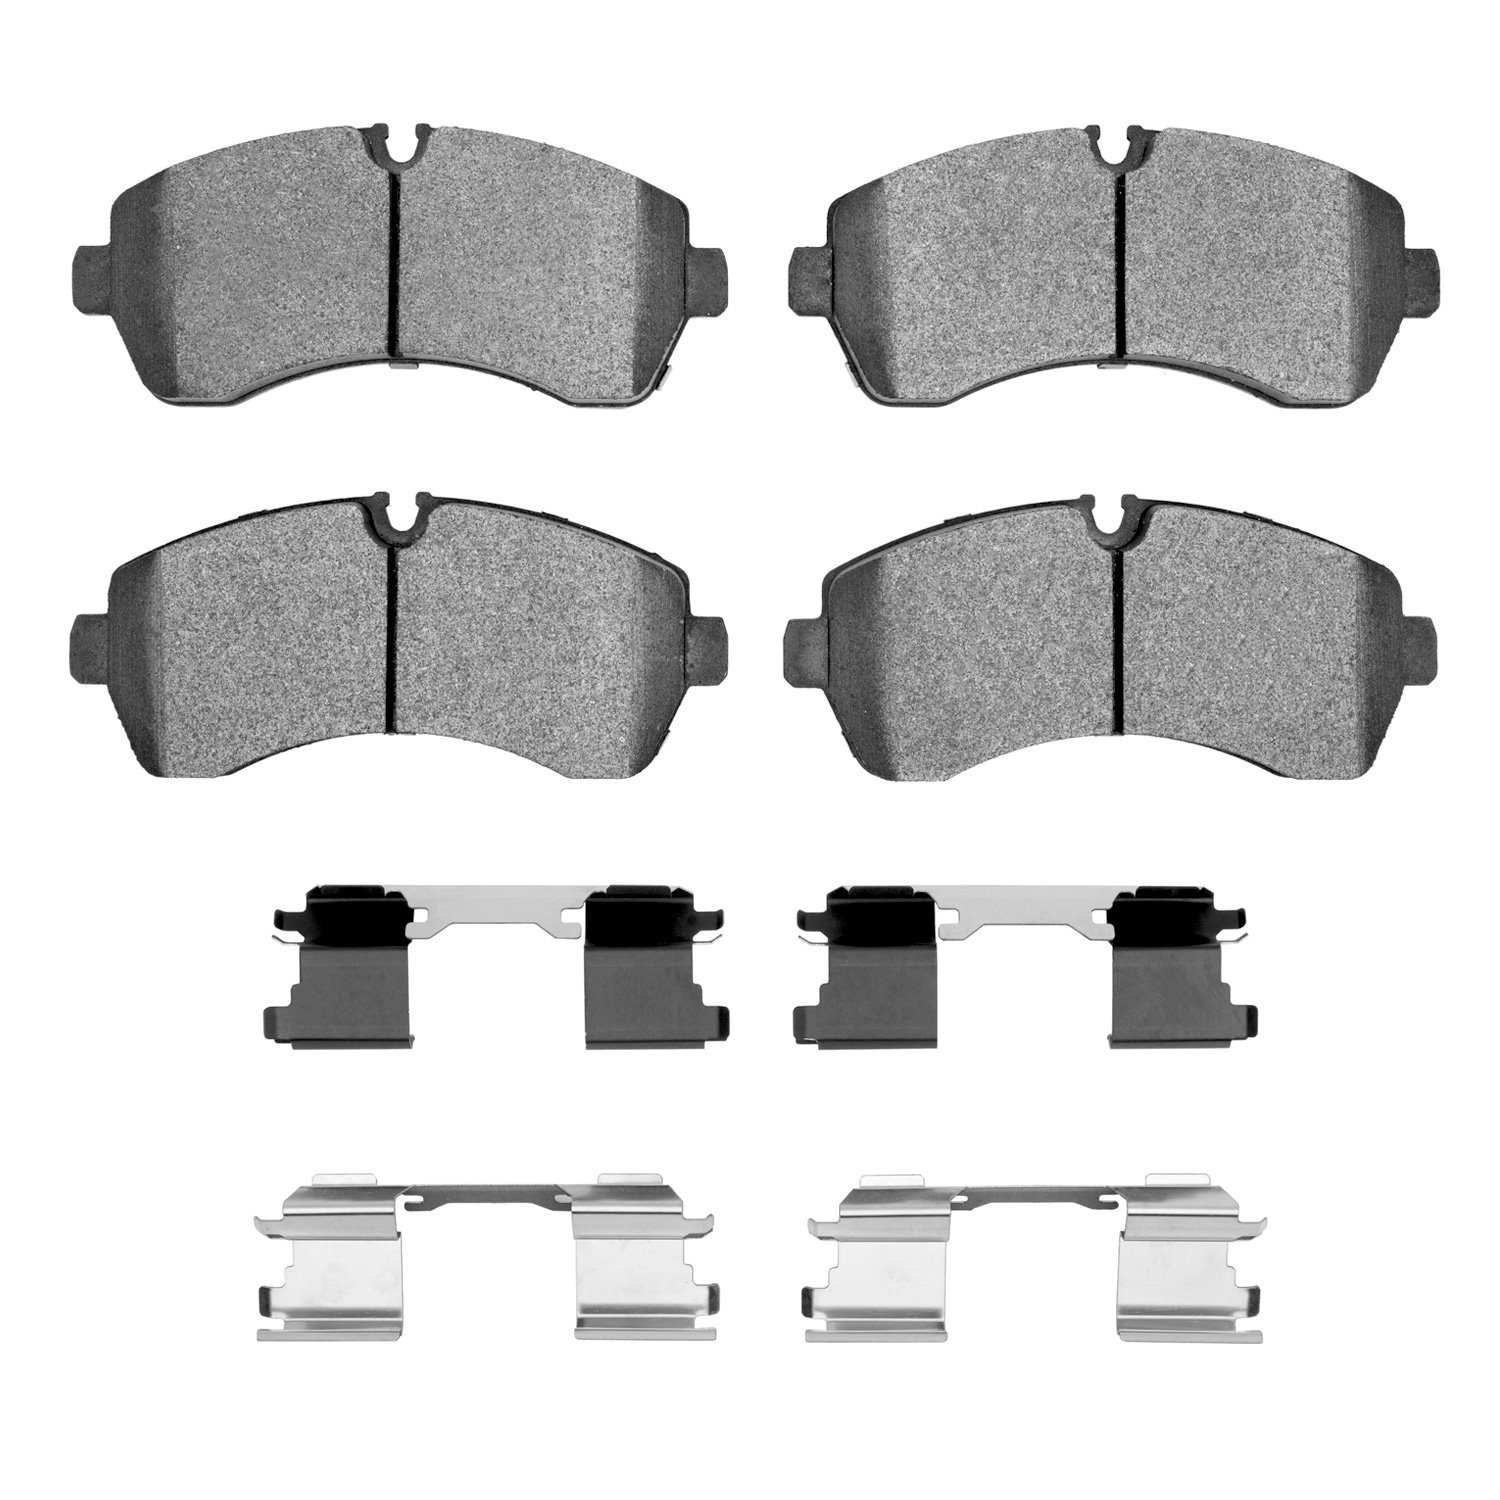 Semi-Metallic Brake Pads & Hardware Kit, 2006-2021 Fits Multiple Makes/Models, Position: Front & Rear